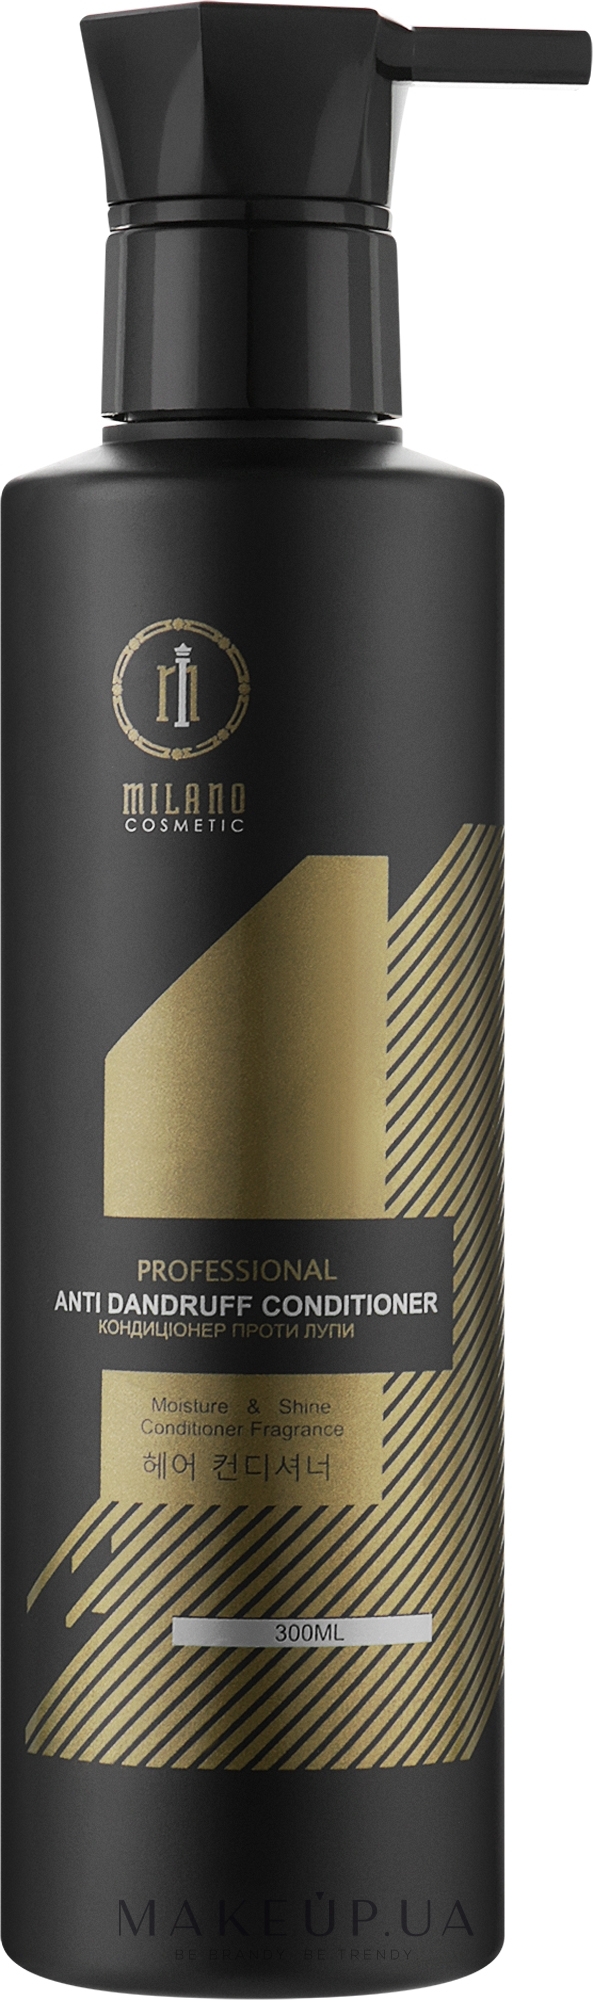 Кондиціонер для волосся проти лупи - Milano Cosmetic Professional Anti Dandruff Conditioner — фото 300ml